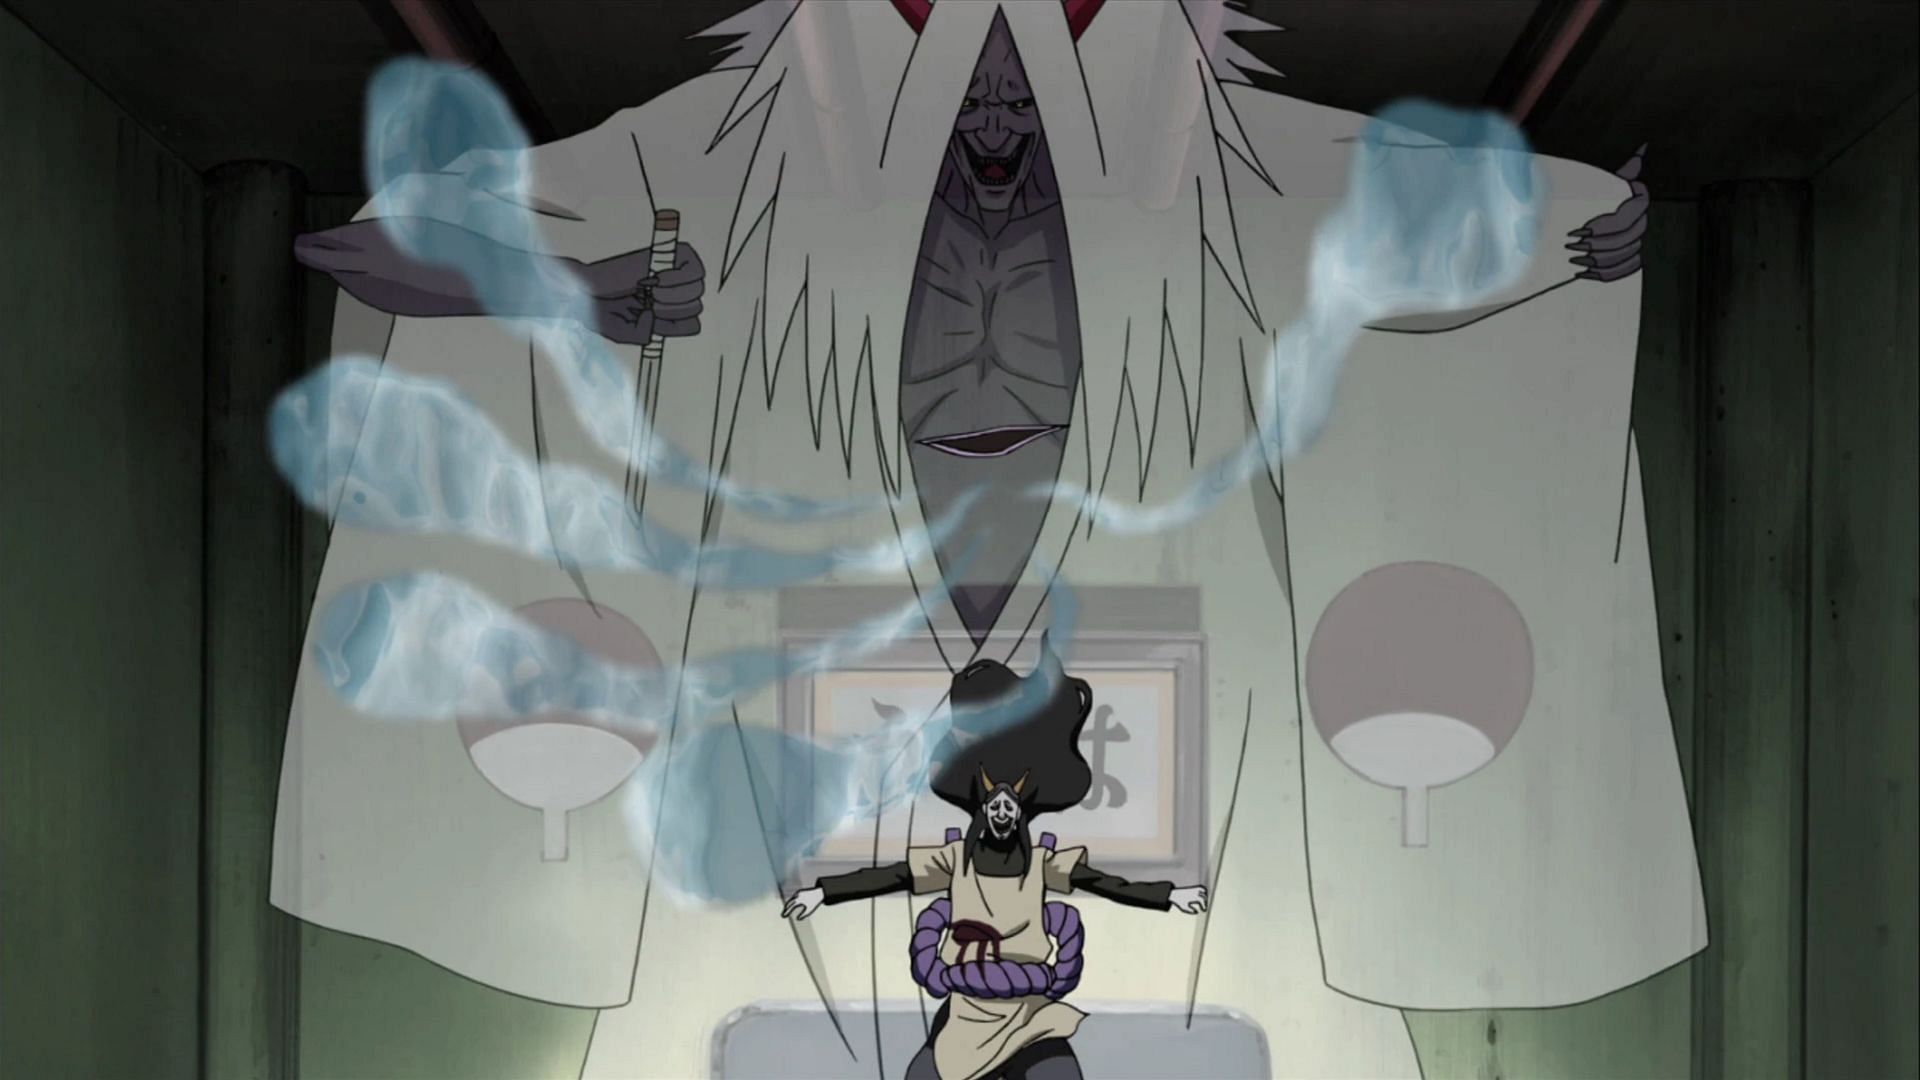 Orochimaru releasing the trapped souls as seen in Naruto Shippuden (Image via Studio Pierrot)